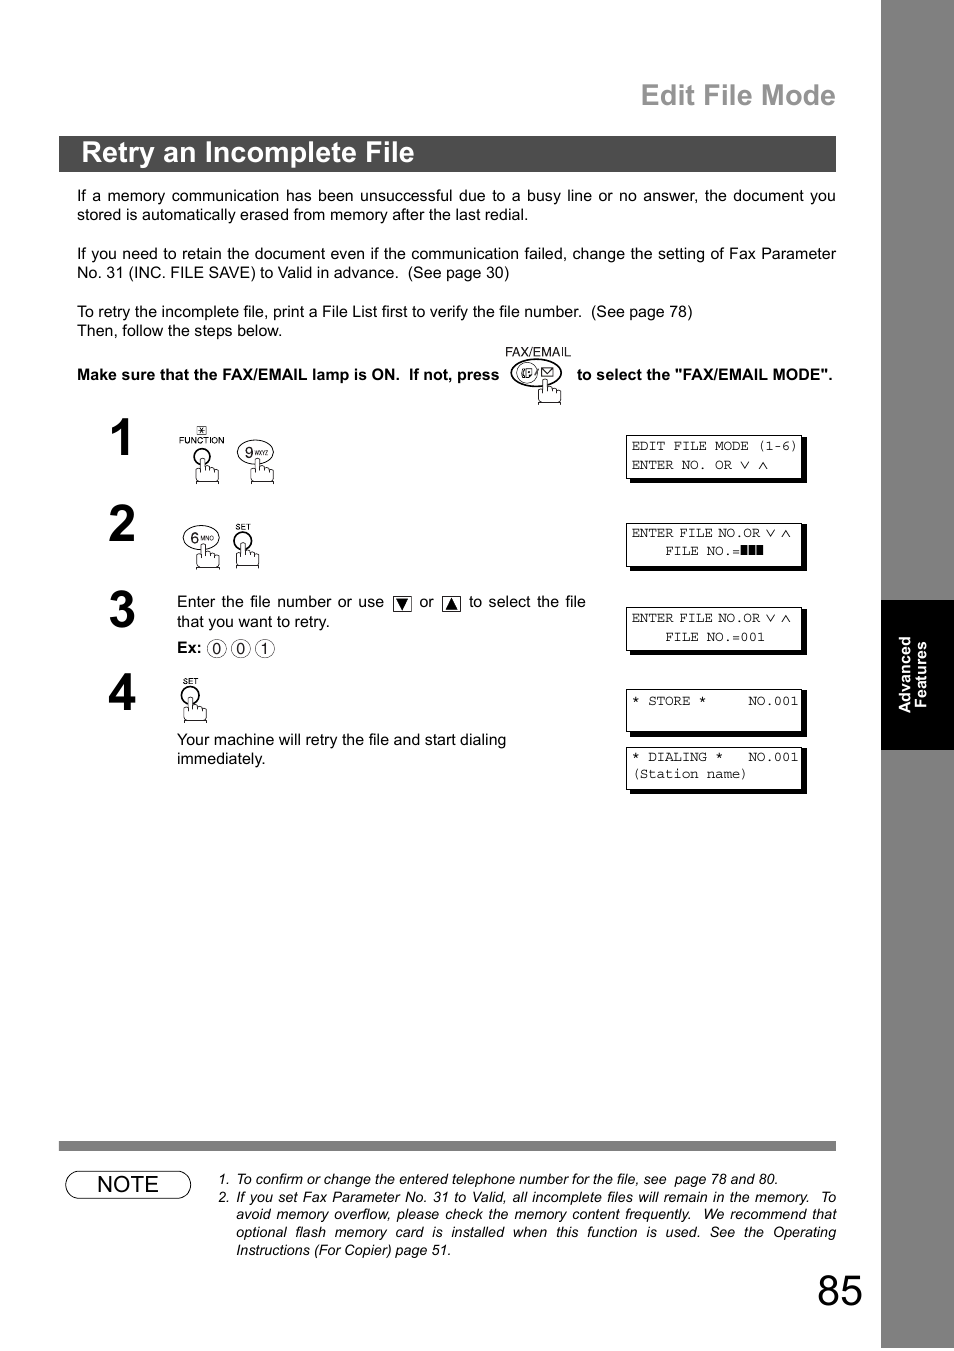 Retry an incomplete file, Edit file mode | Panasonic DP-1810F Manuel d'utilisation | Page 85 / 158